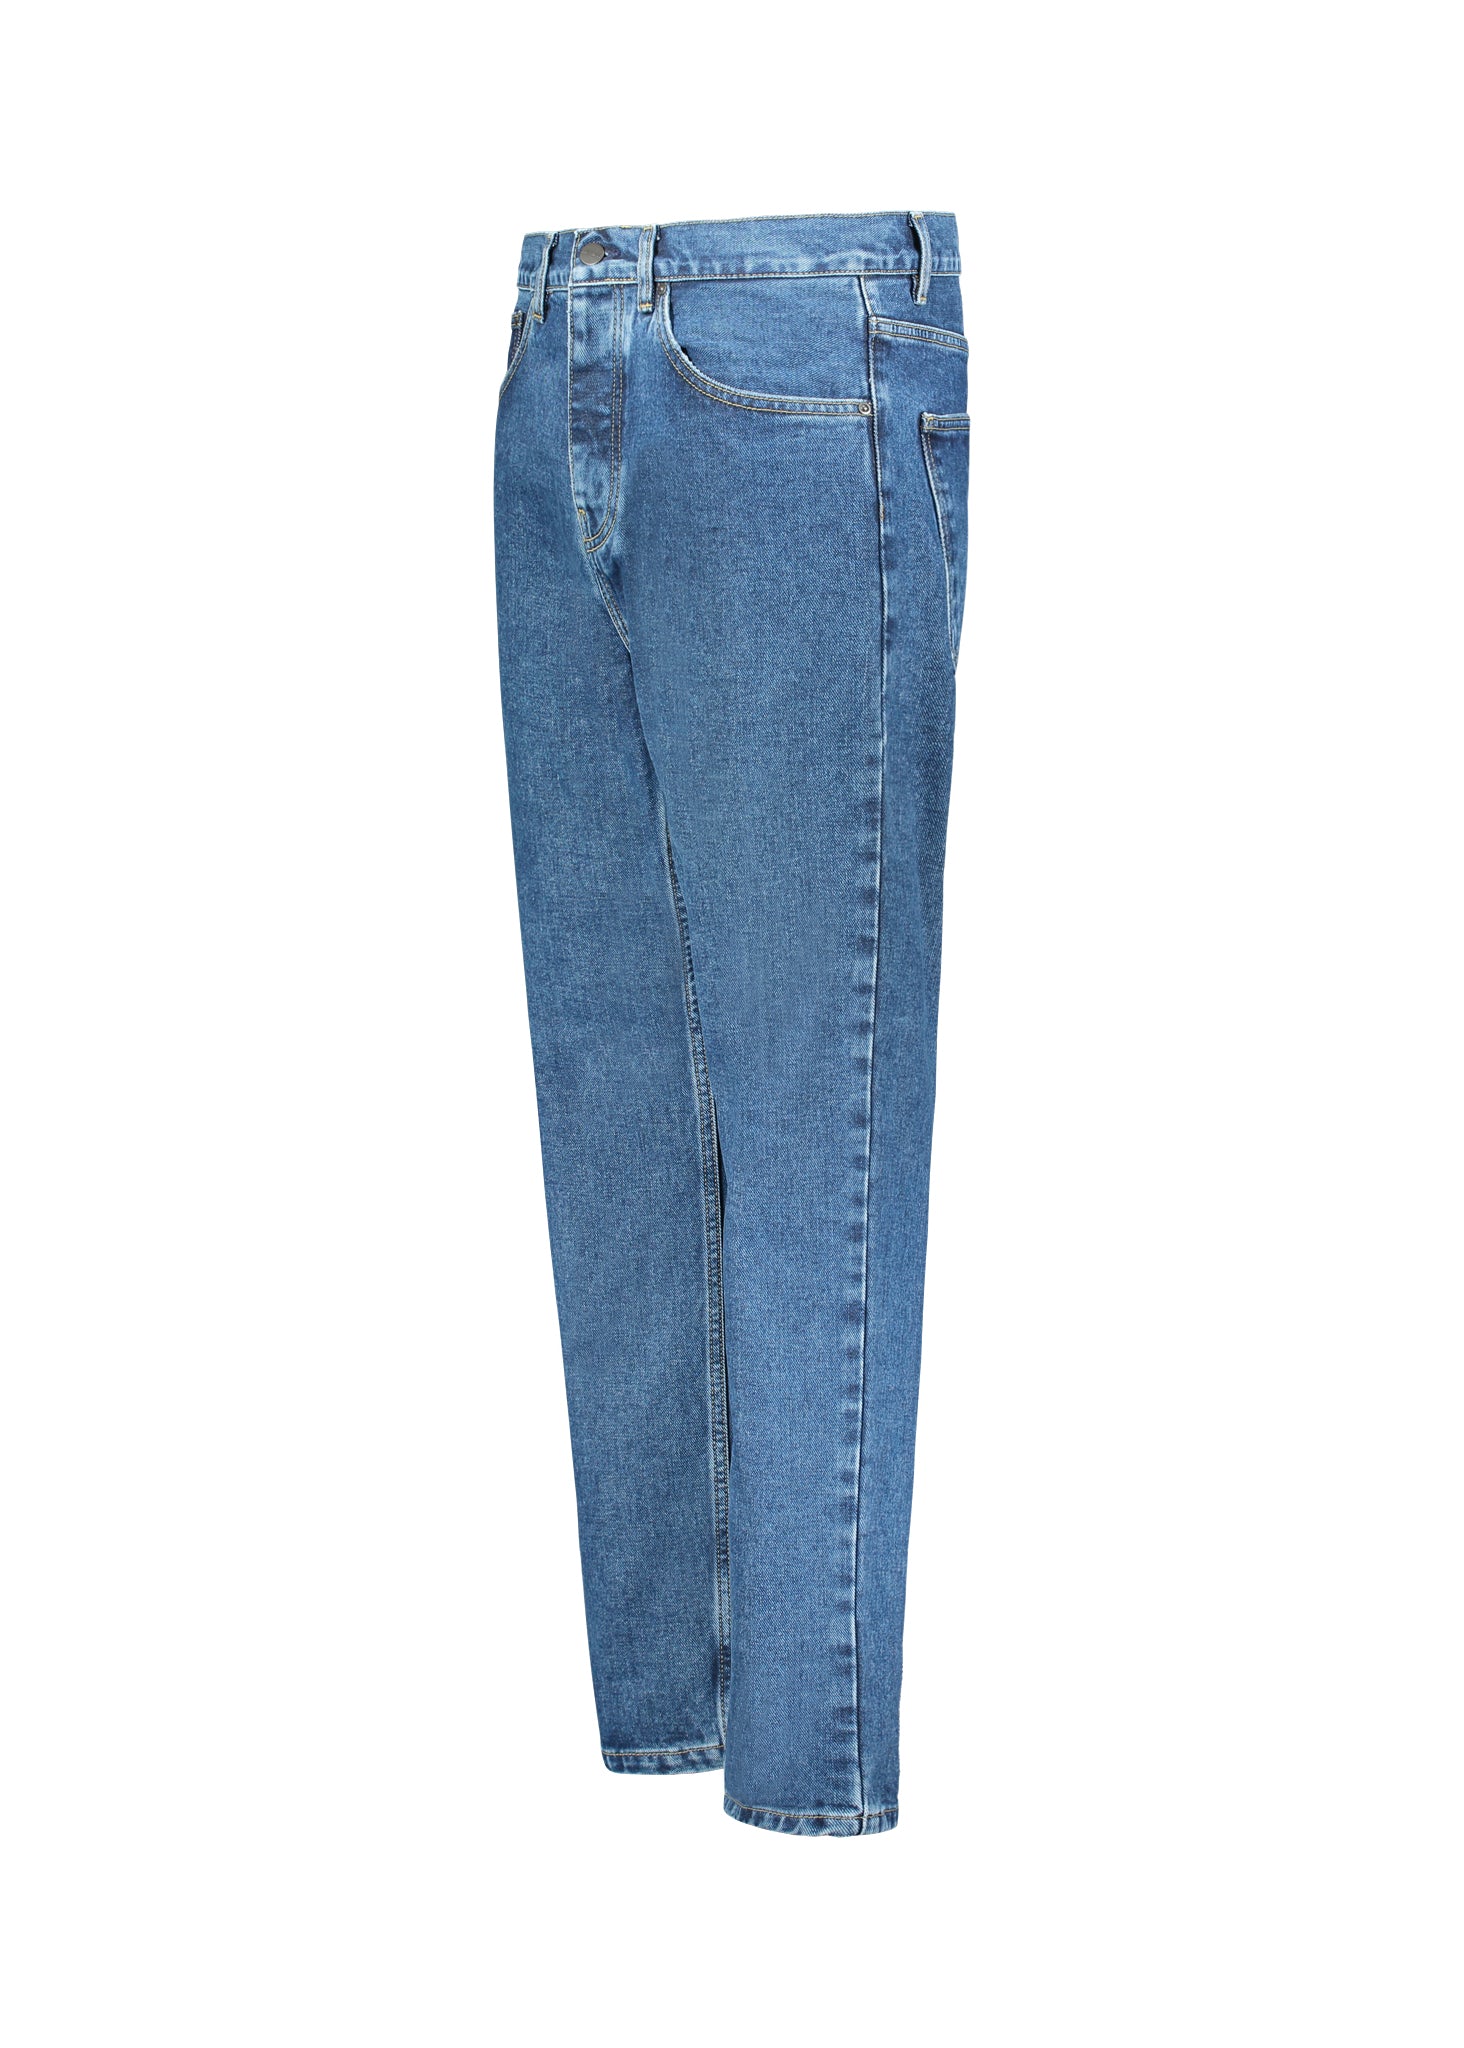 Carhartt Newel Pant Denim Blue Jeans